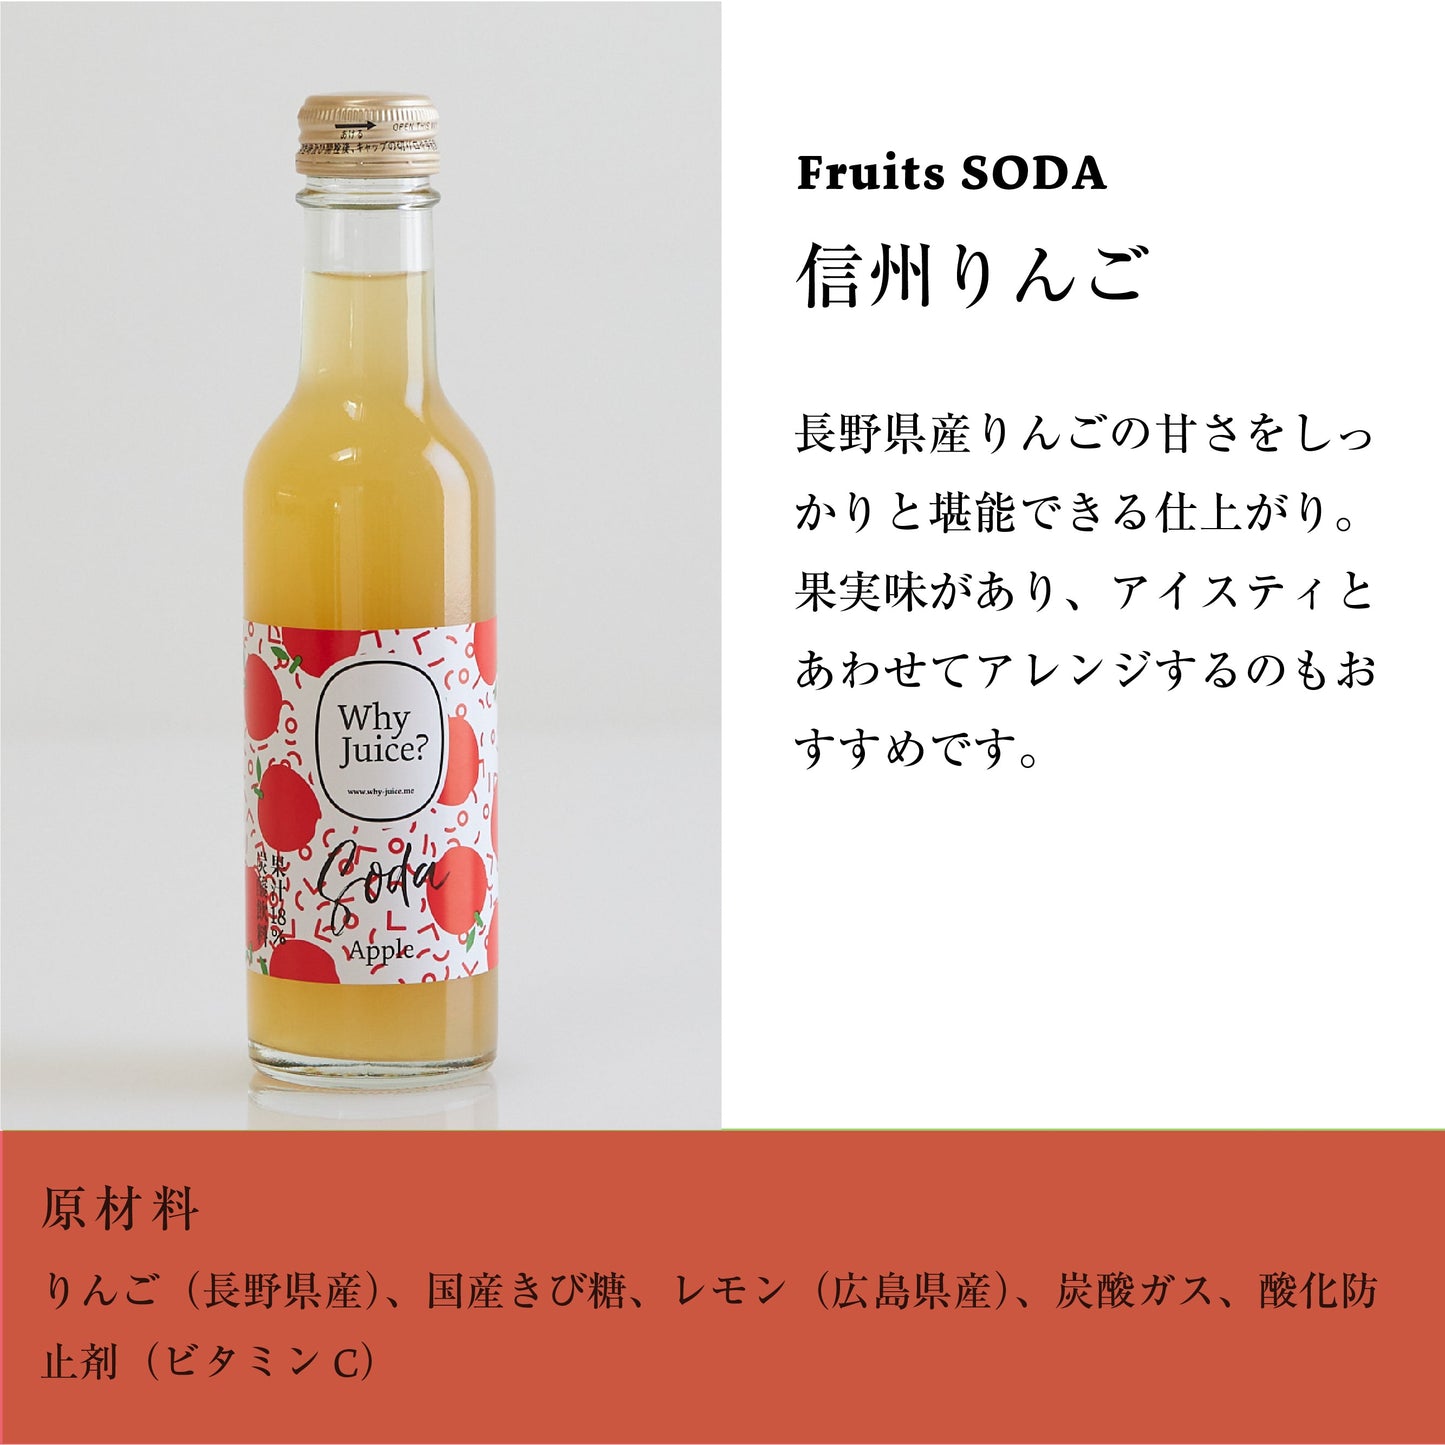 Fruits SODA 信州りんご (30本入)【減農薬・無農薬の果物と野菜】